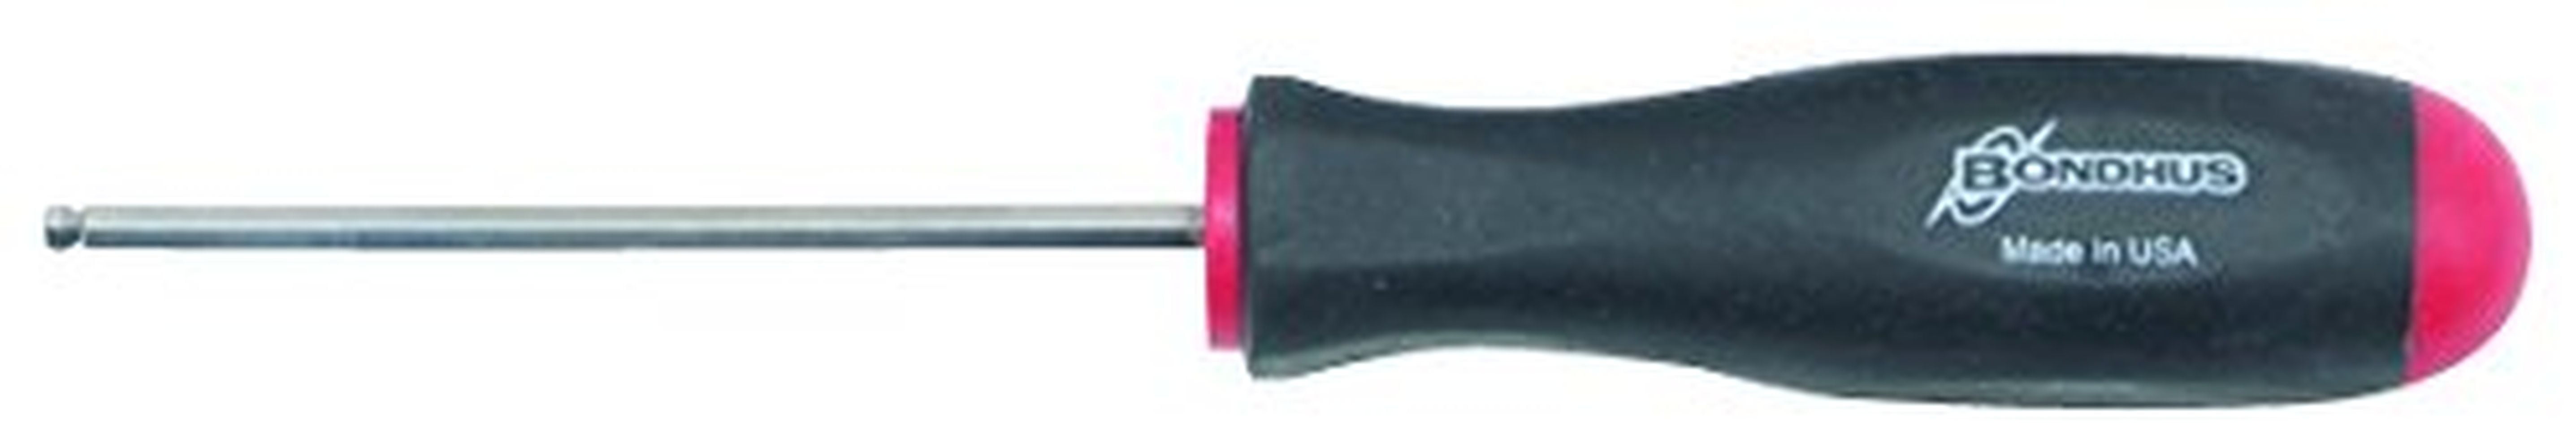 Reversible screwdriver ph.2+sl6mm FSK handle bimateria Ergonomic bd684 